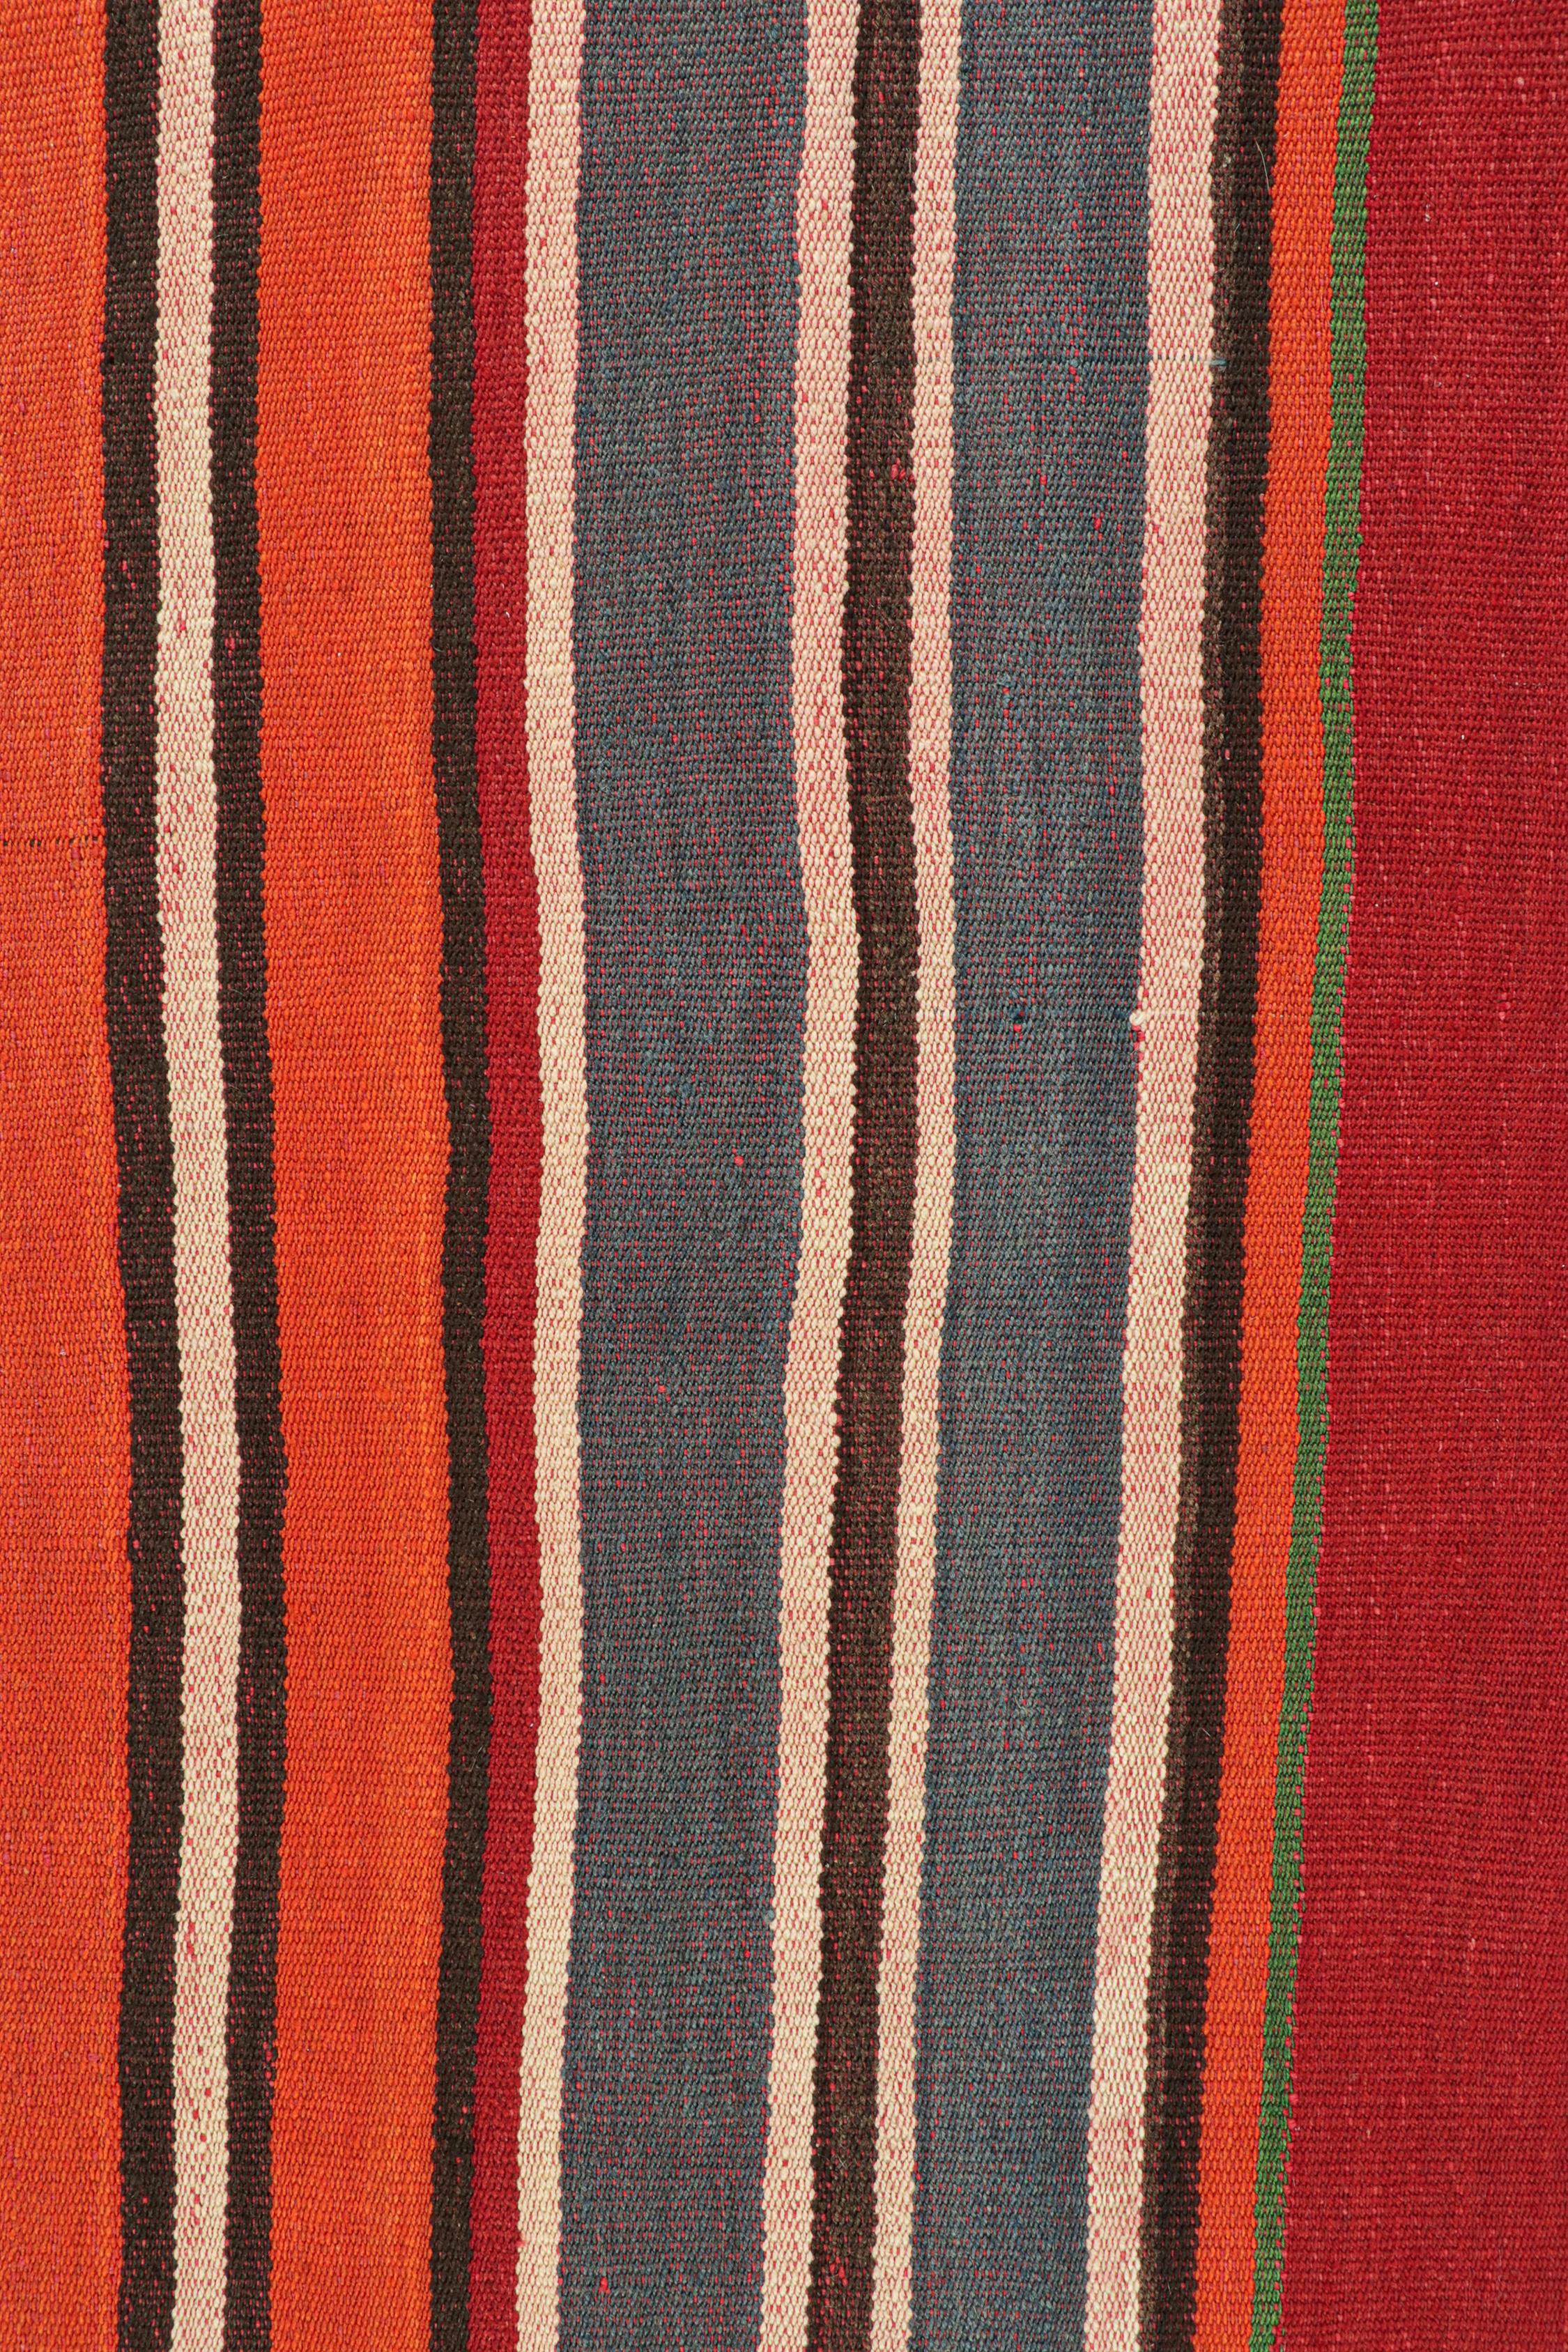 Mid-20th Century Vintage Qashqai Persian Jajim Kilim in with Multicolor Stripes by Rug & Kilim For Sale